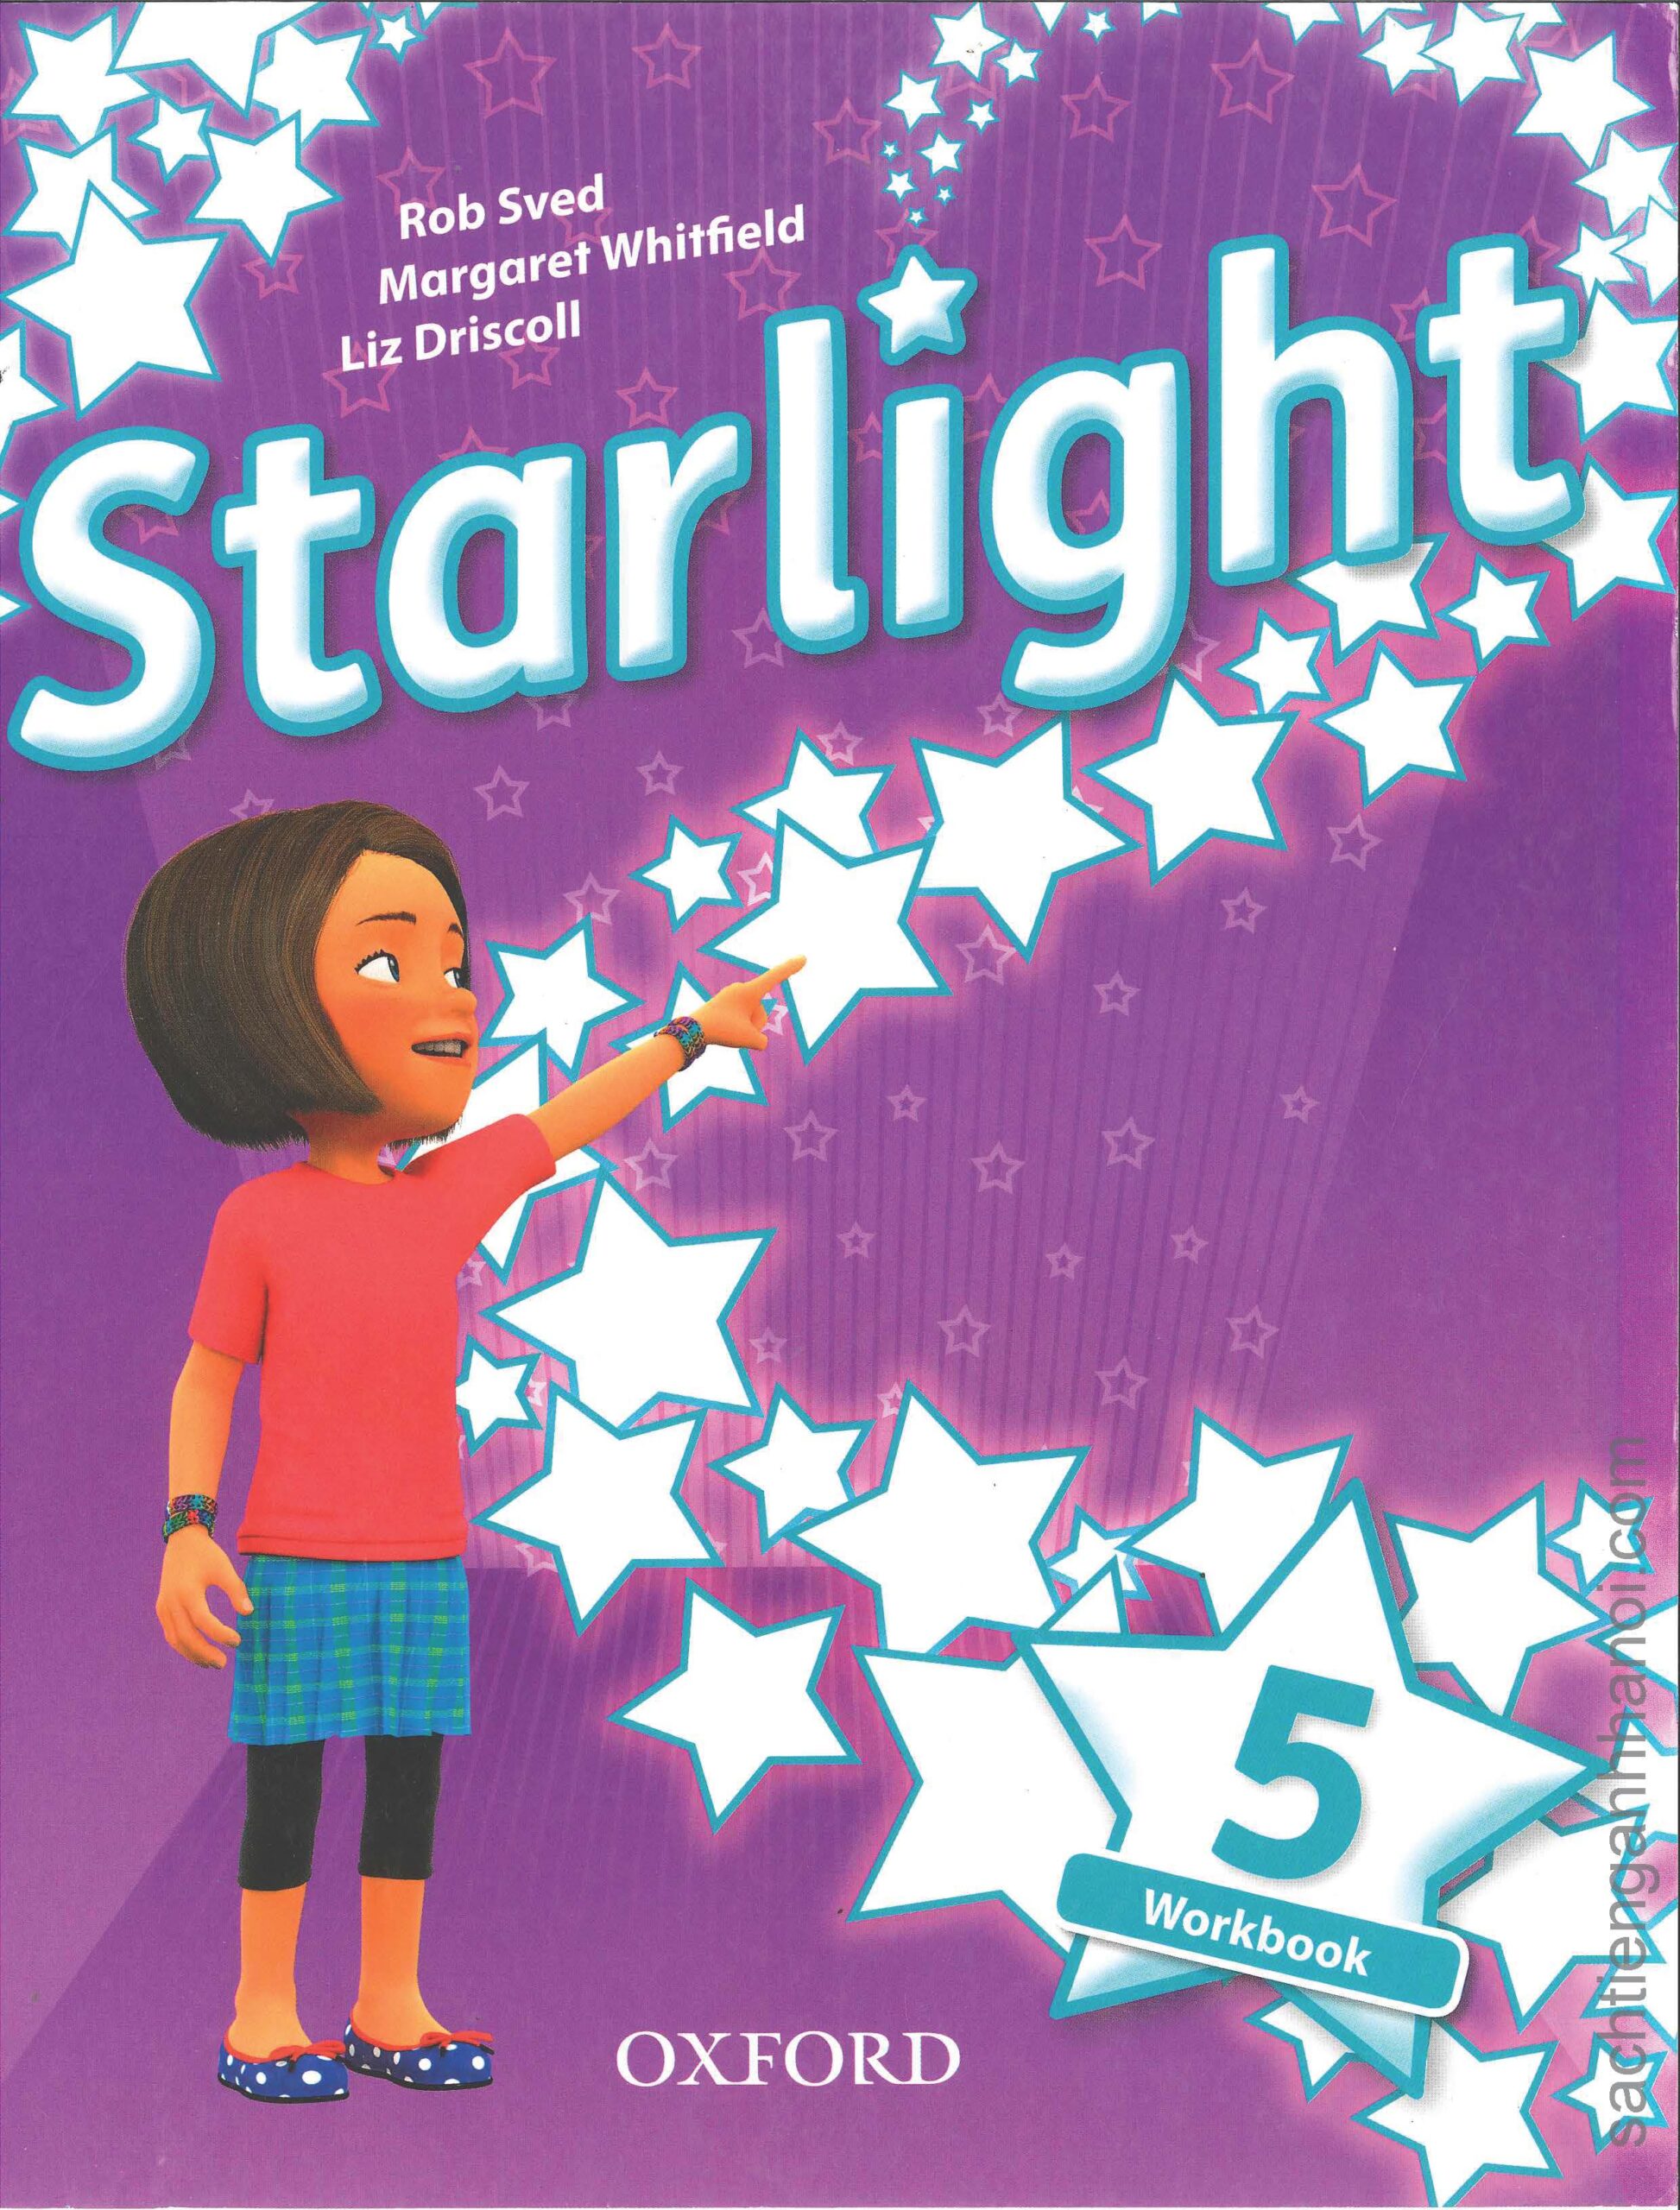 S 9 starlight. Starlight 5. WB Starlight 5. Starlight 5 УМК. Starlight 5 Workbook.